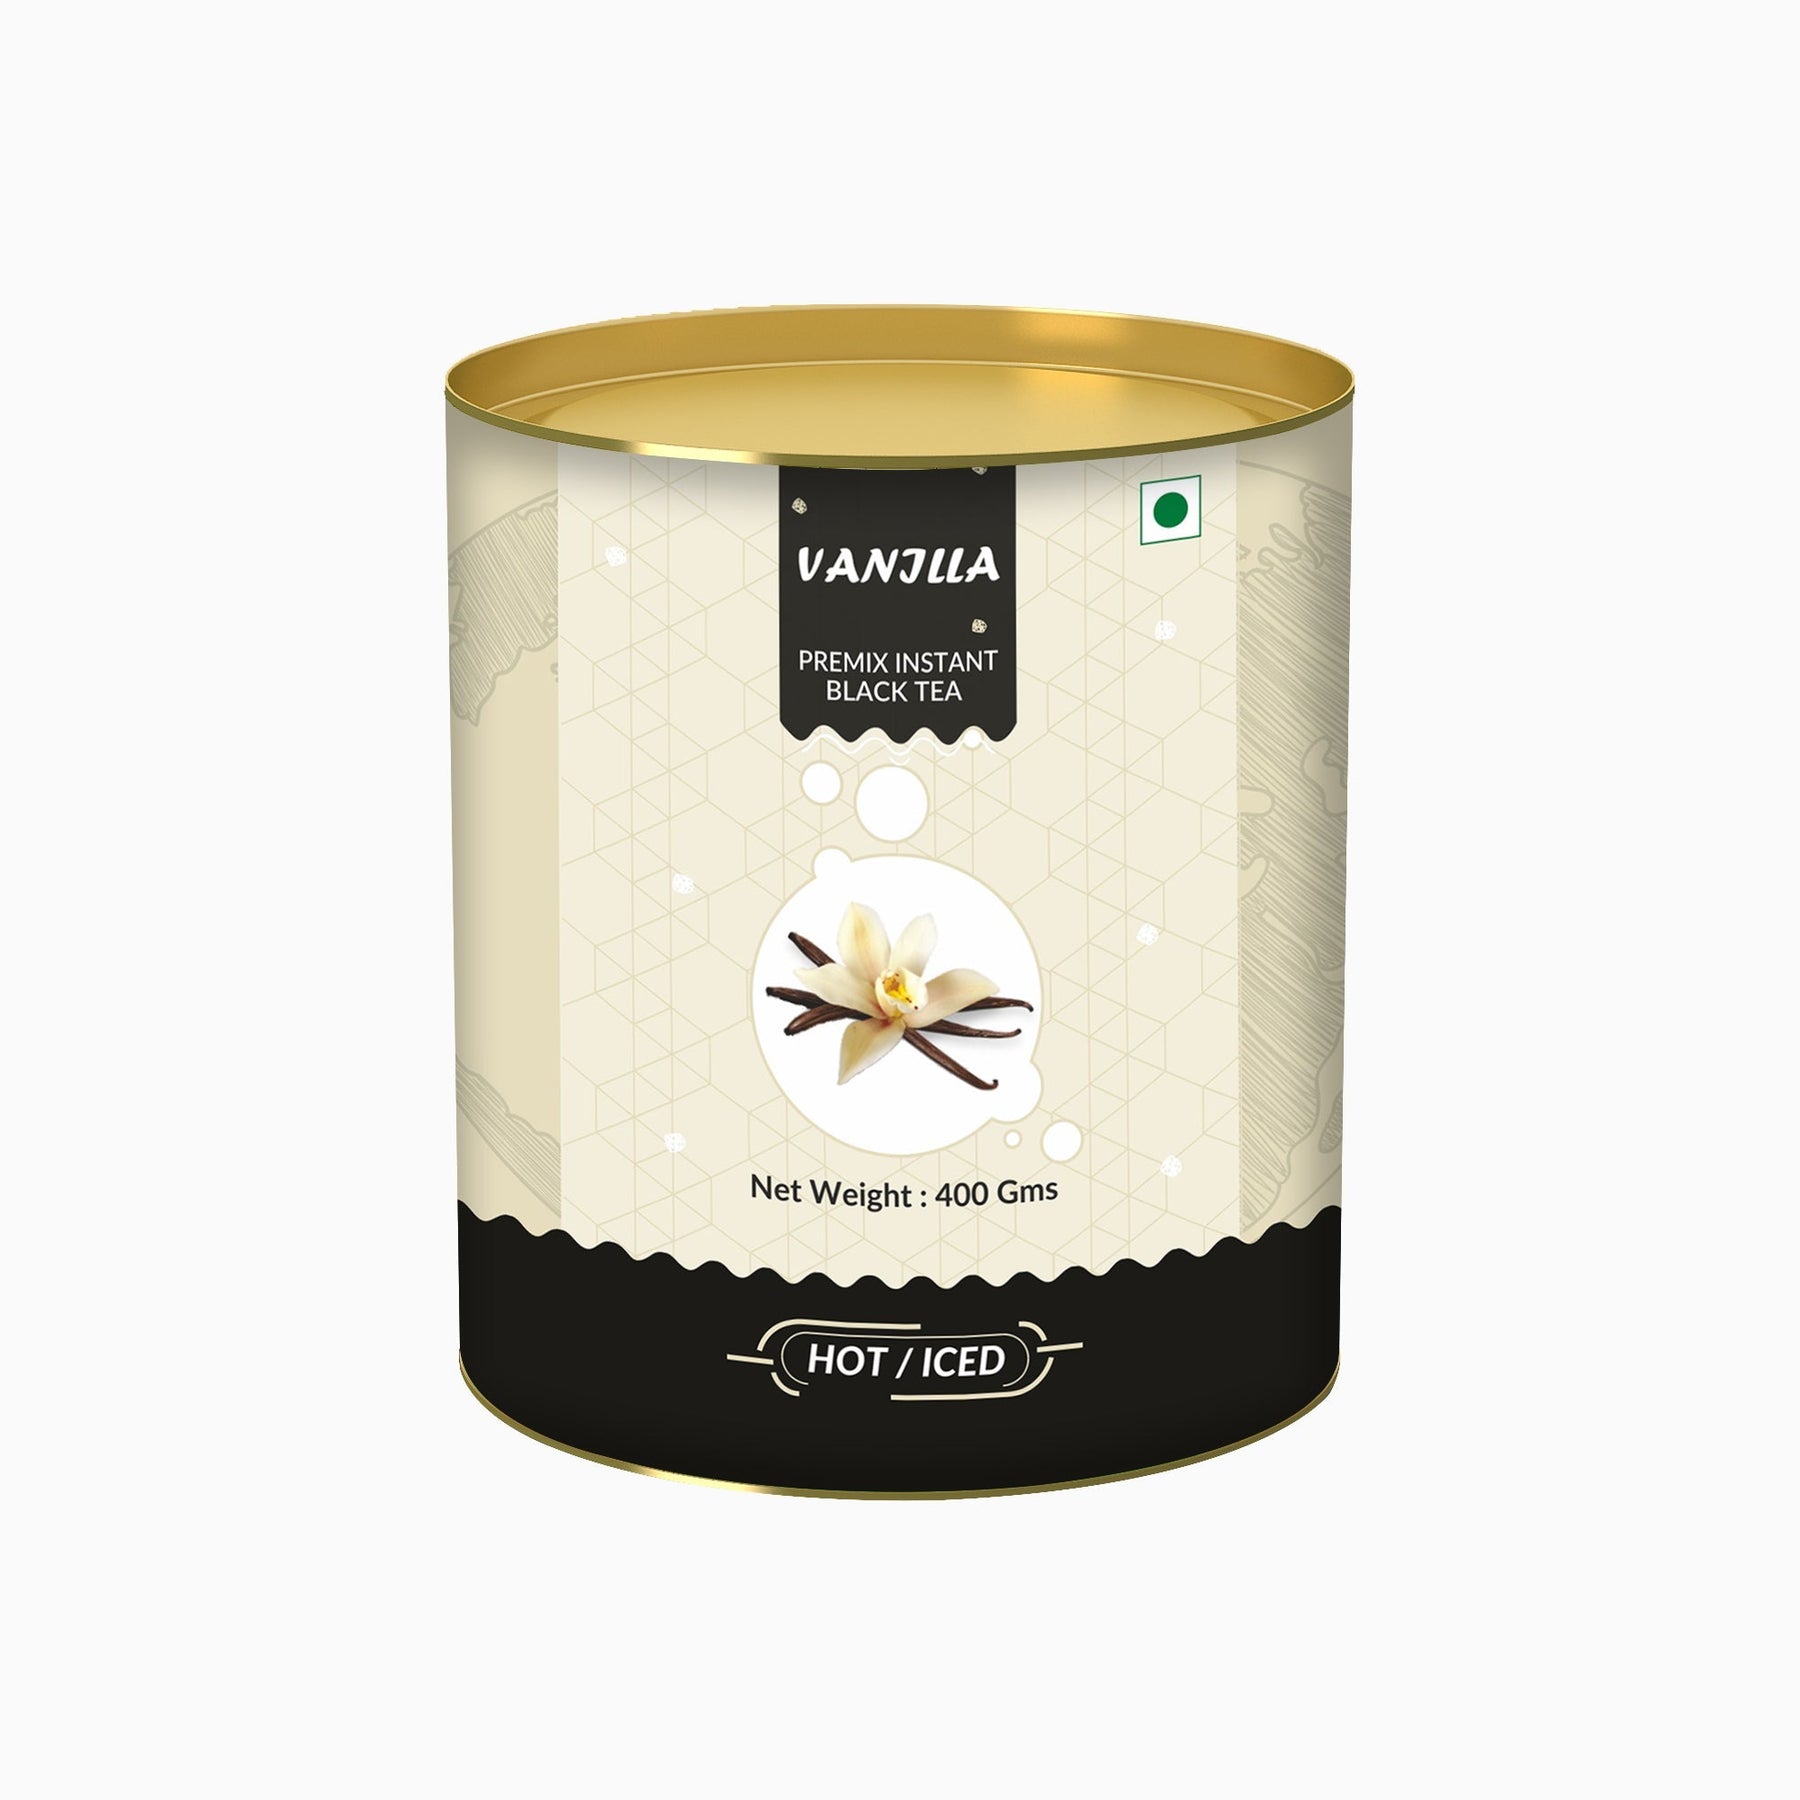 Jasmine Flavored Instant Black Tea - 400 gms